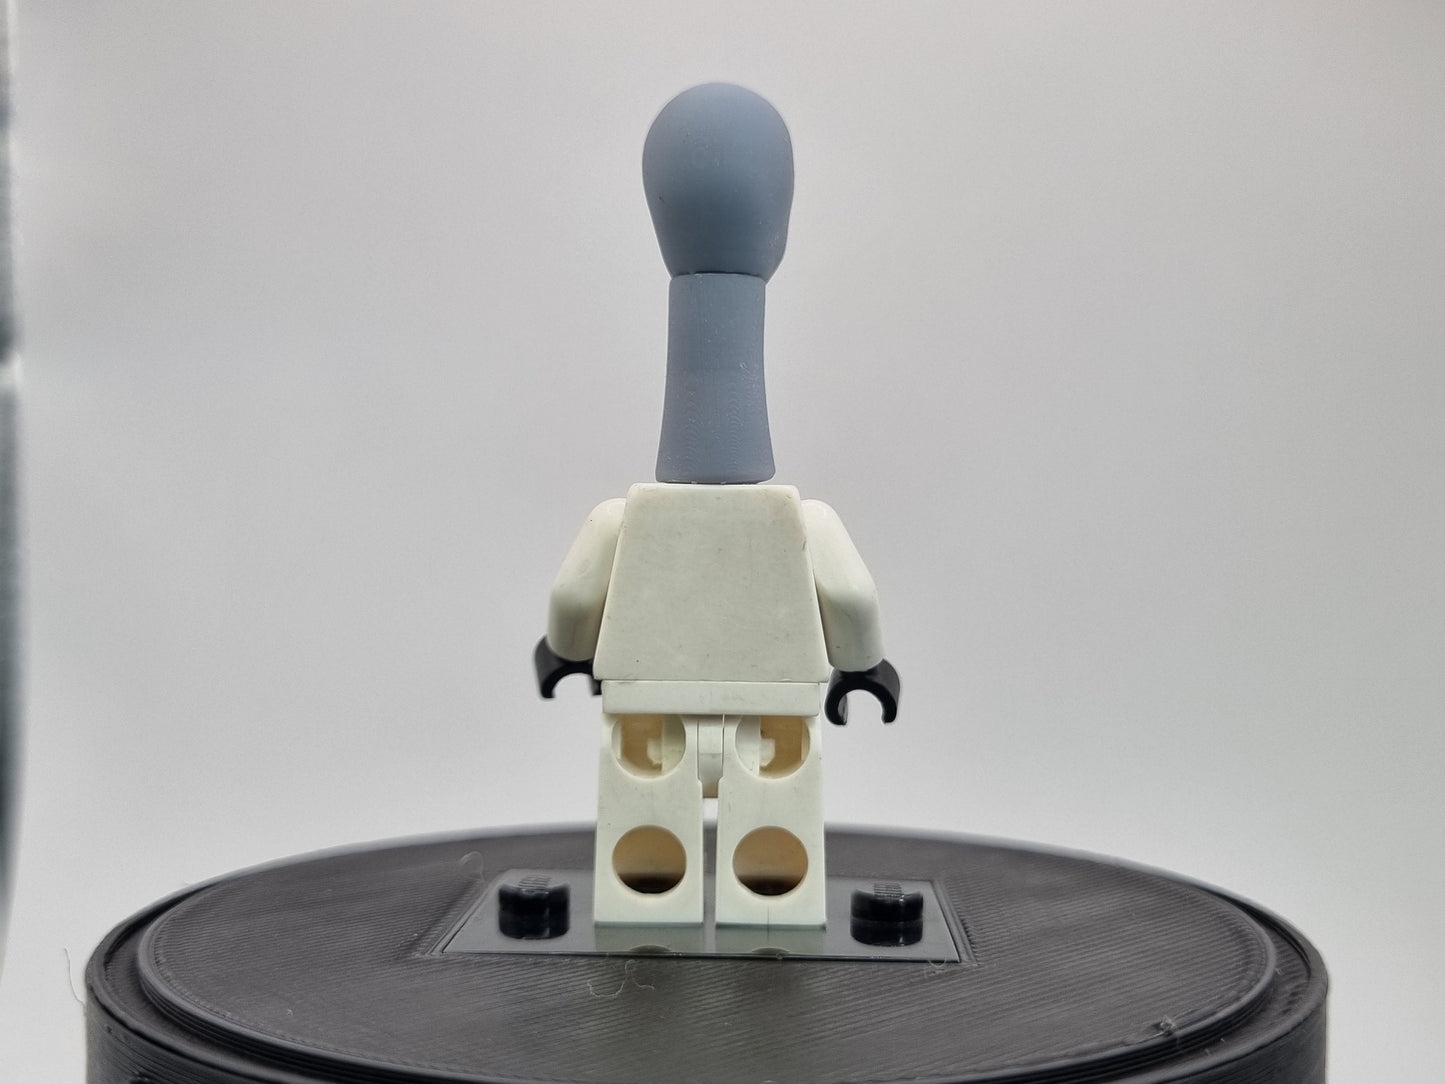 Building toy custom 3D printed Long neck alien head!